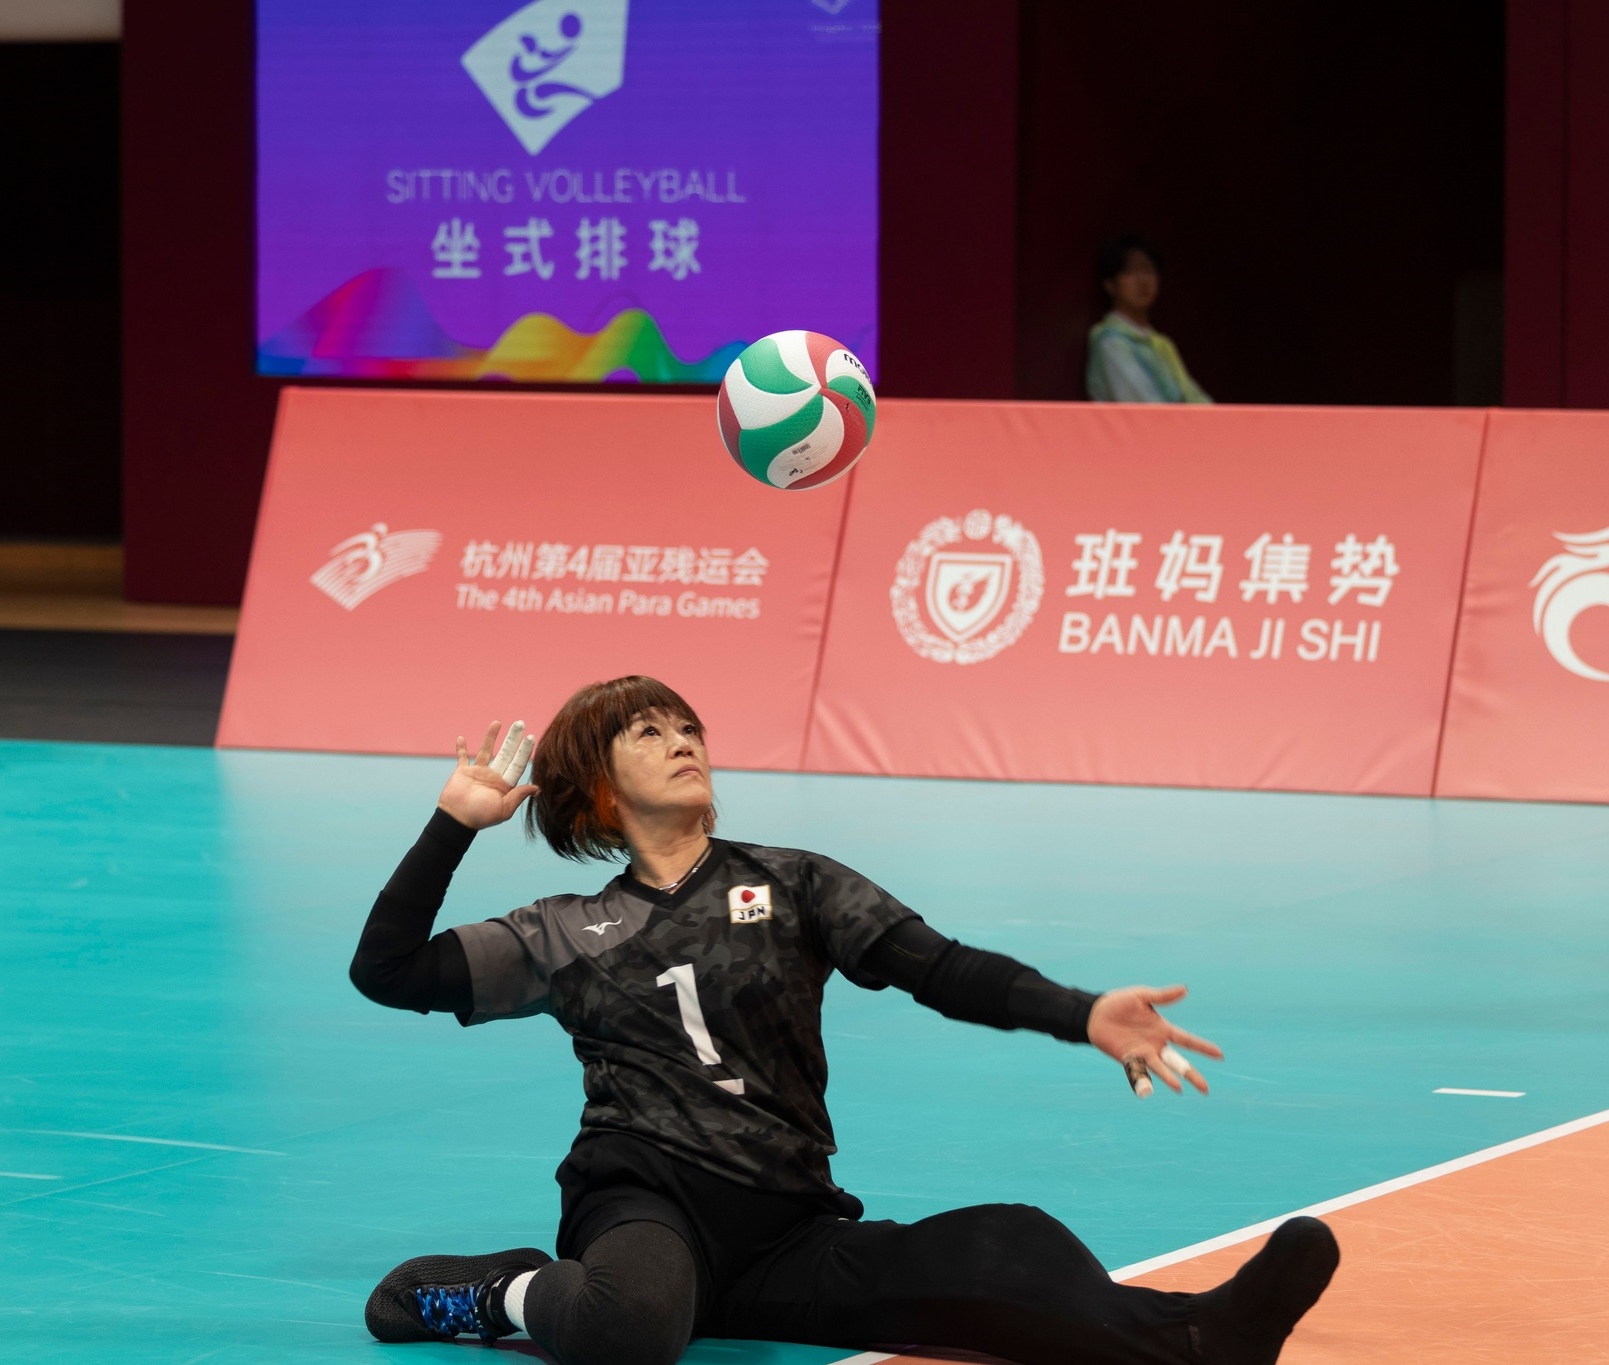 Oturarak voleybol, Aichi-Nagoya 2026 Asya Para Oyunları spor programına dahil